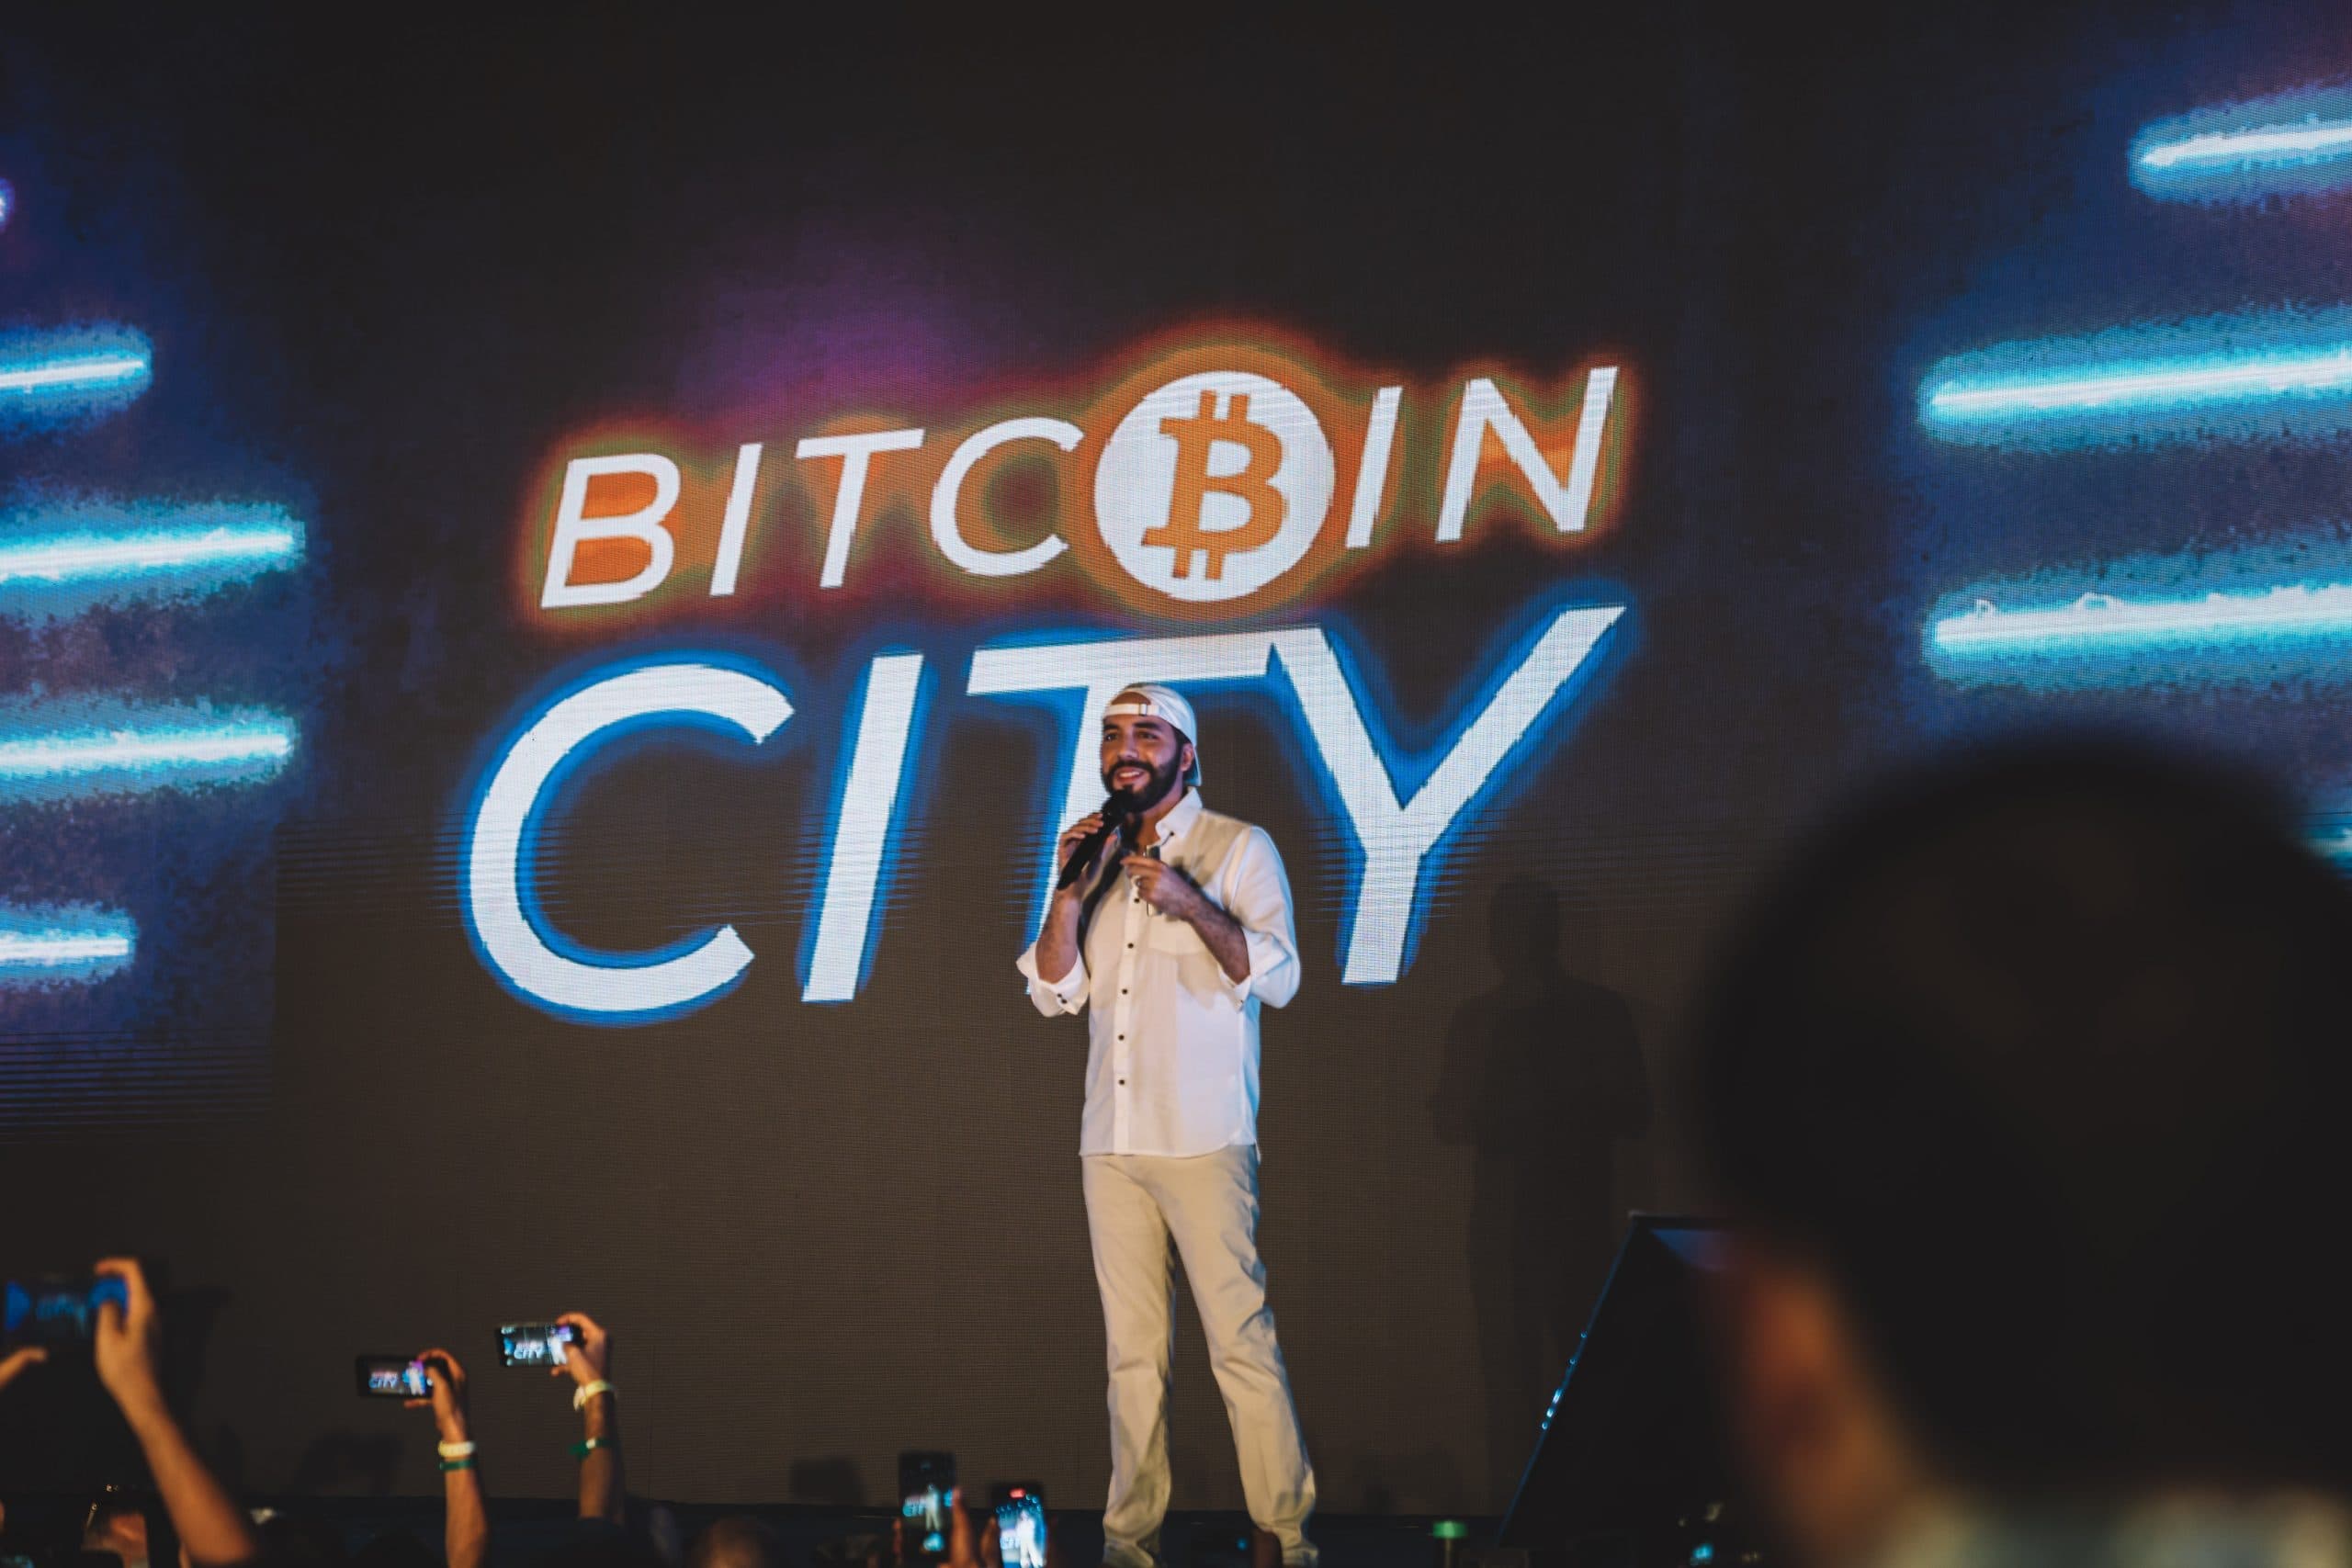 Bitcoin City: Between megalomania and hyperbitcoinization